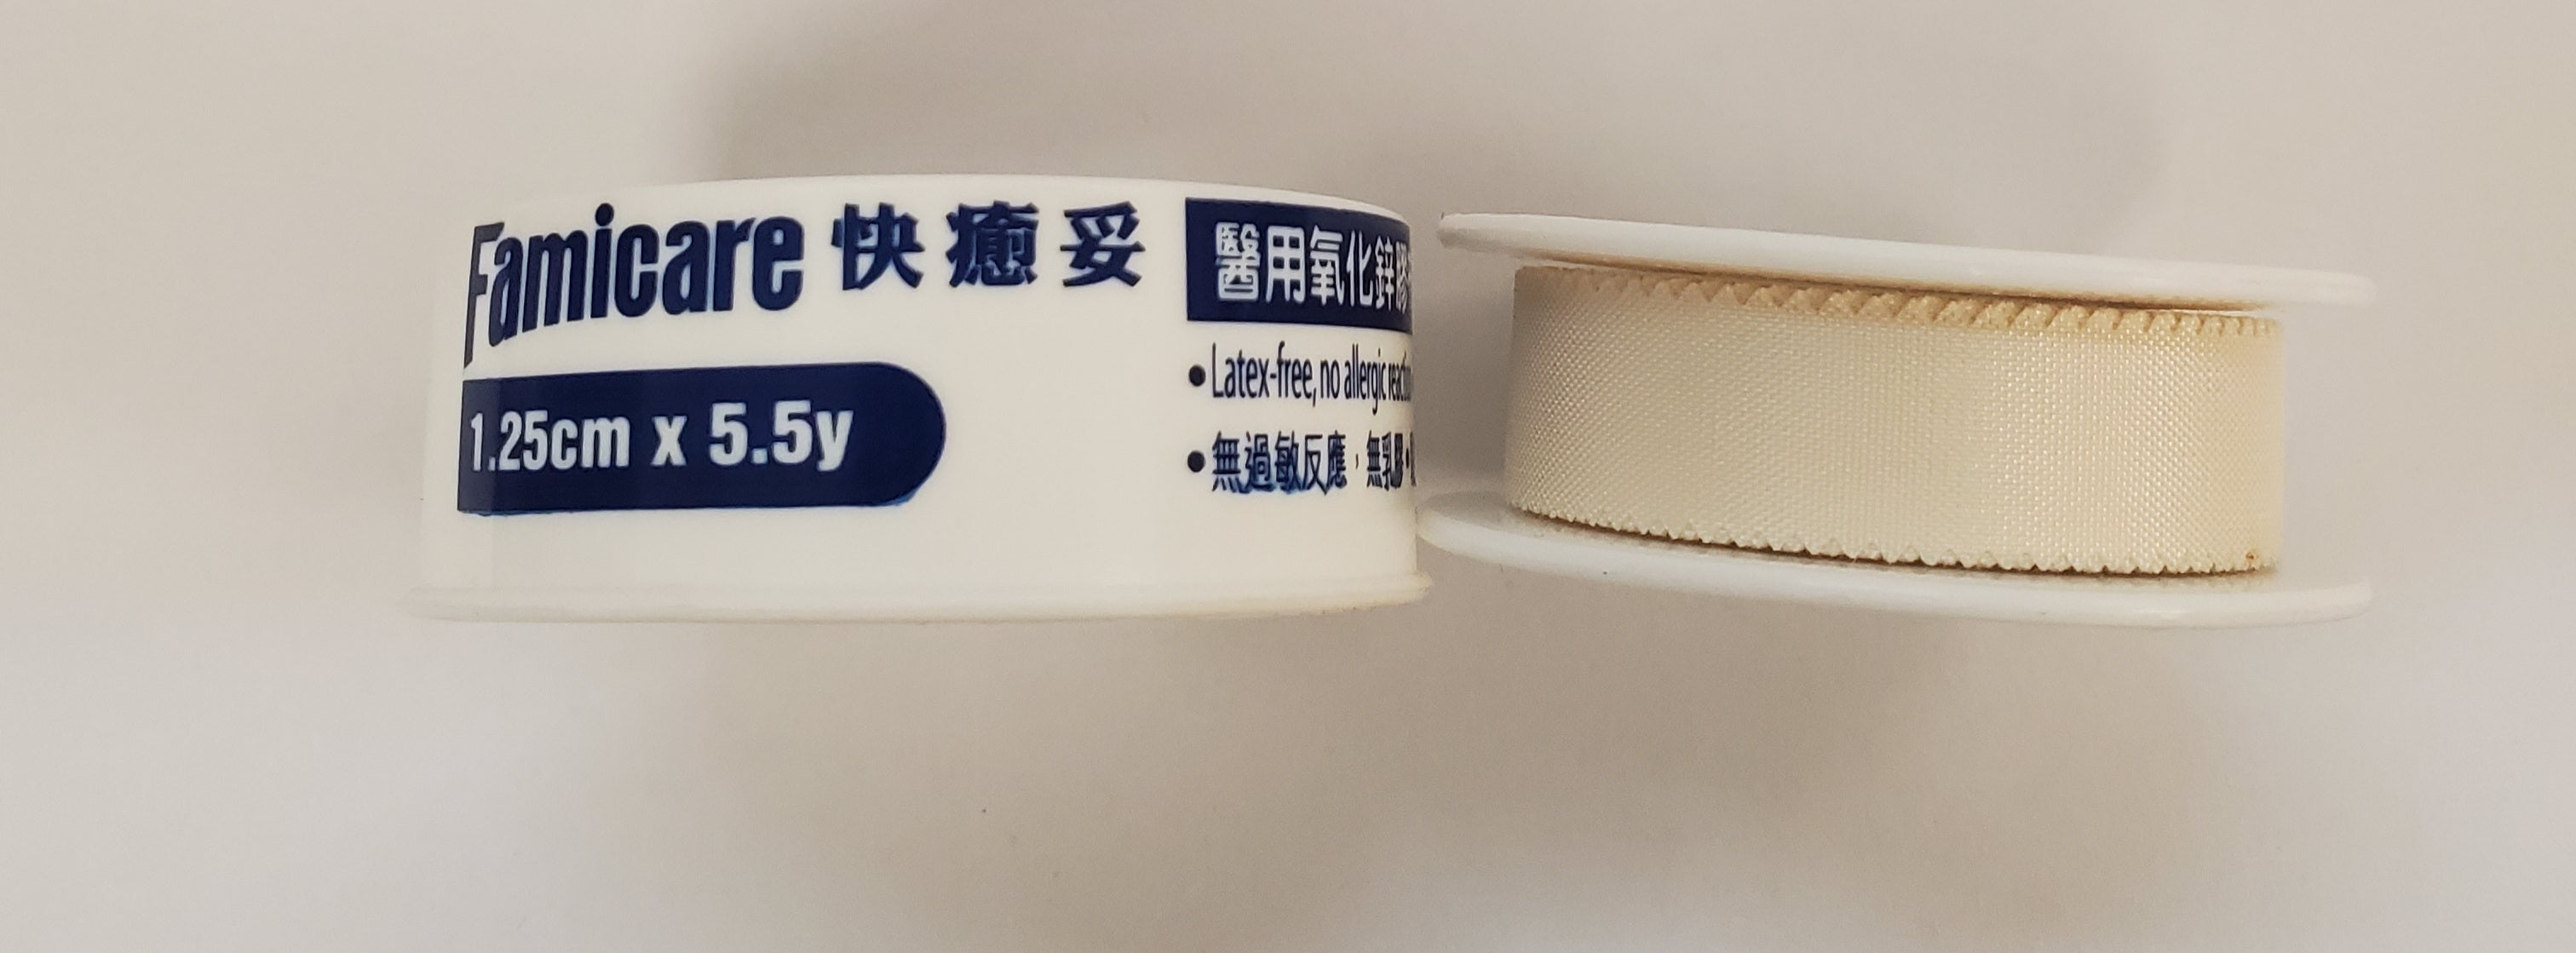 Famicare Zinc Oxide Silk Adhesive Tape (White) - 1.25cm X 5.5y